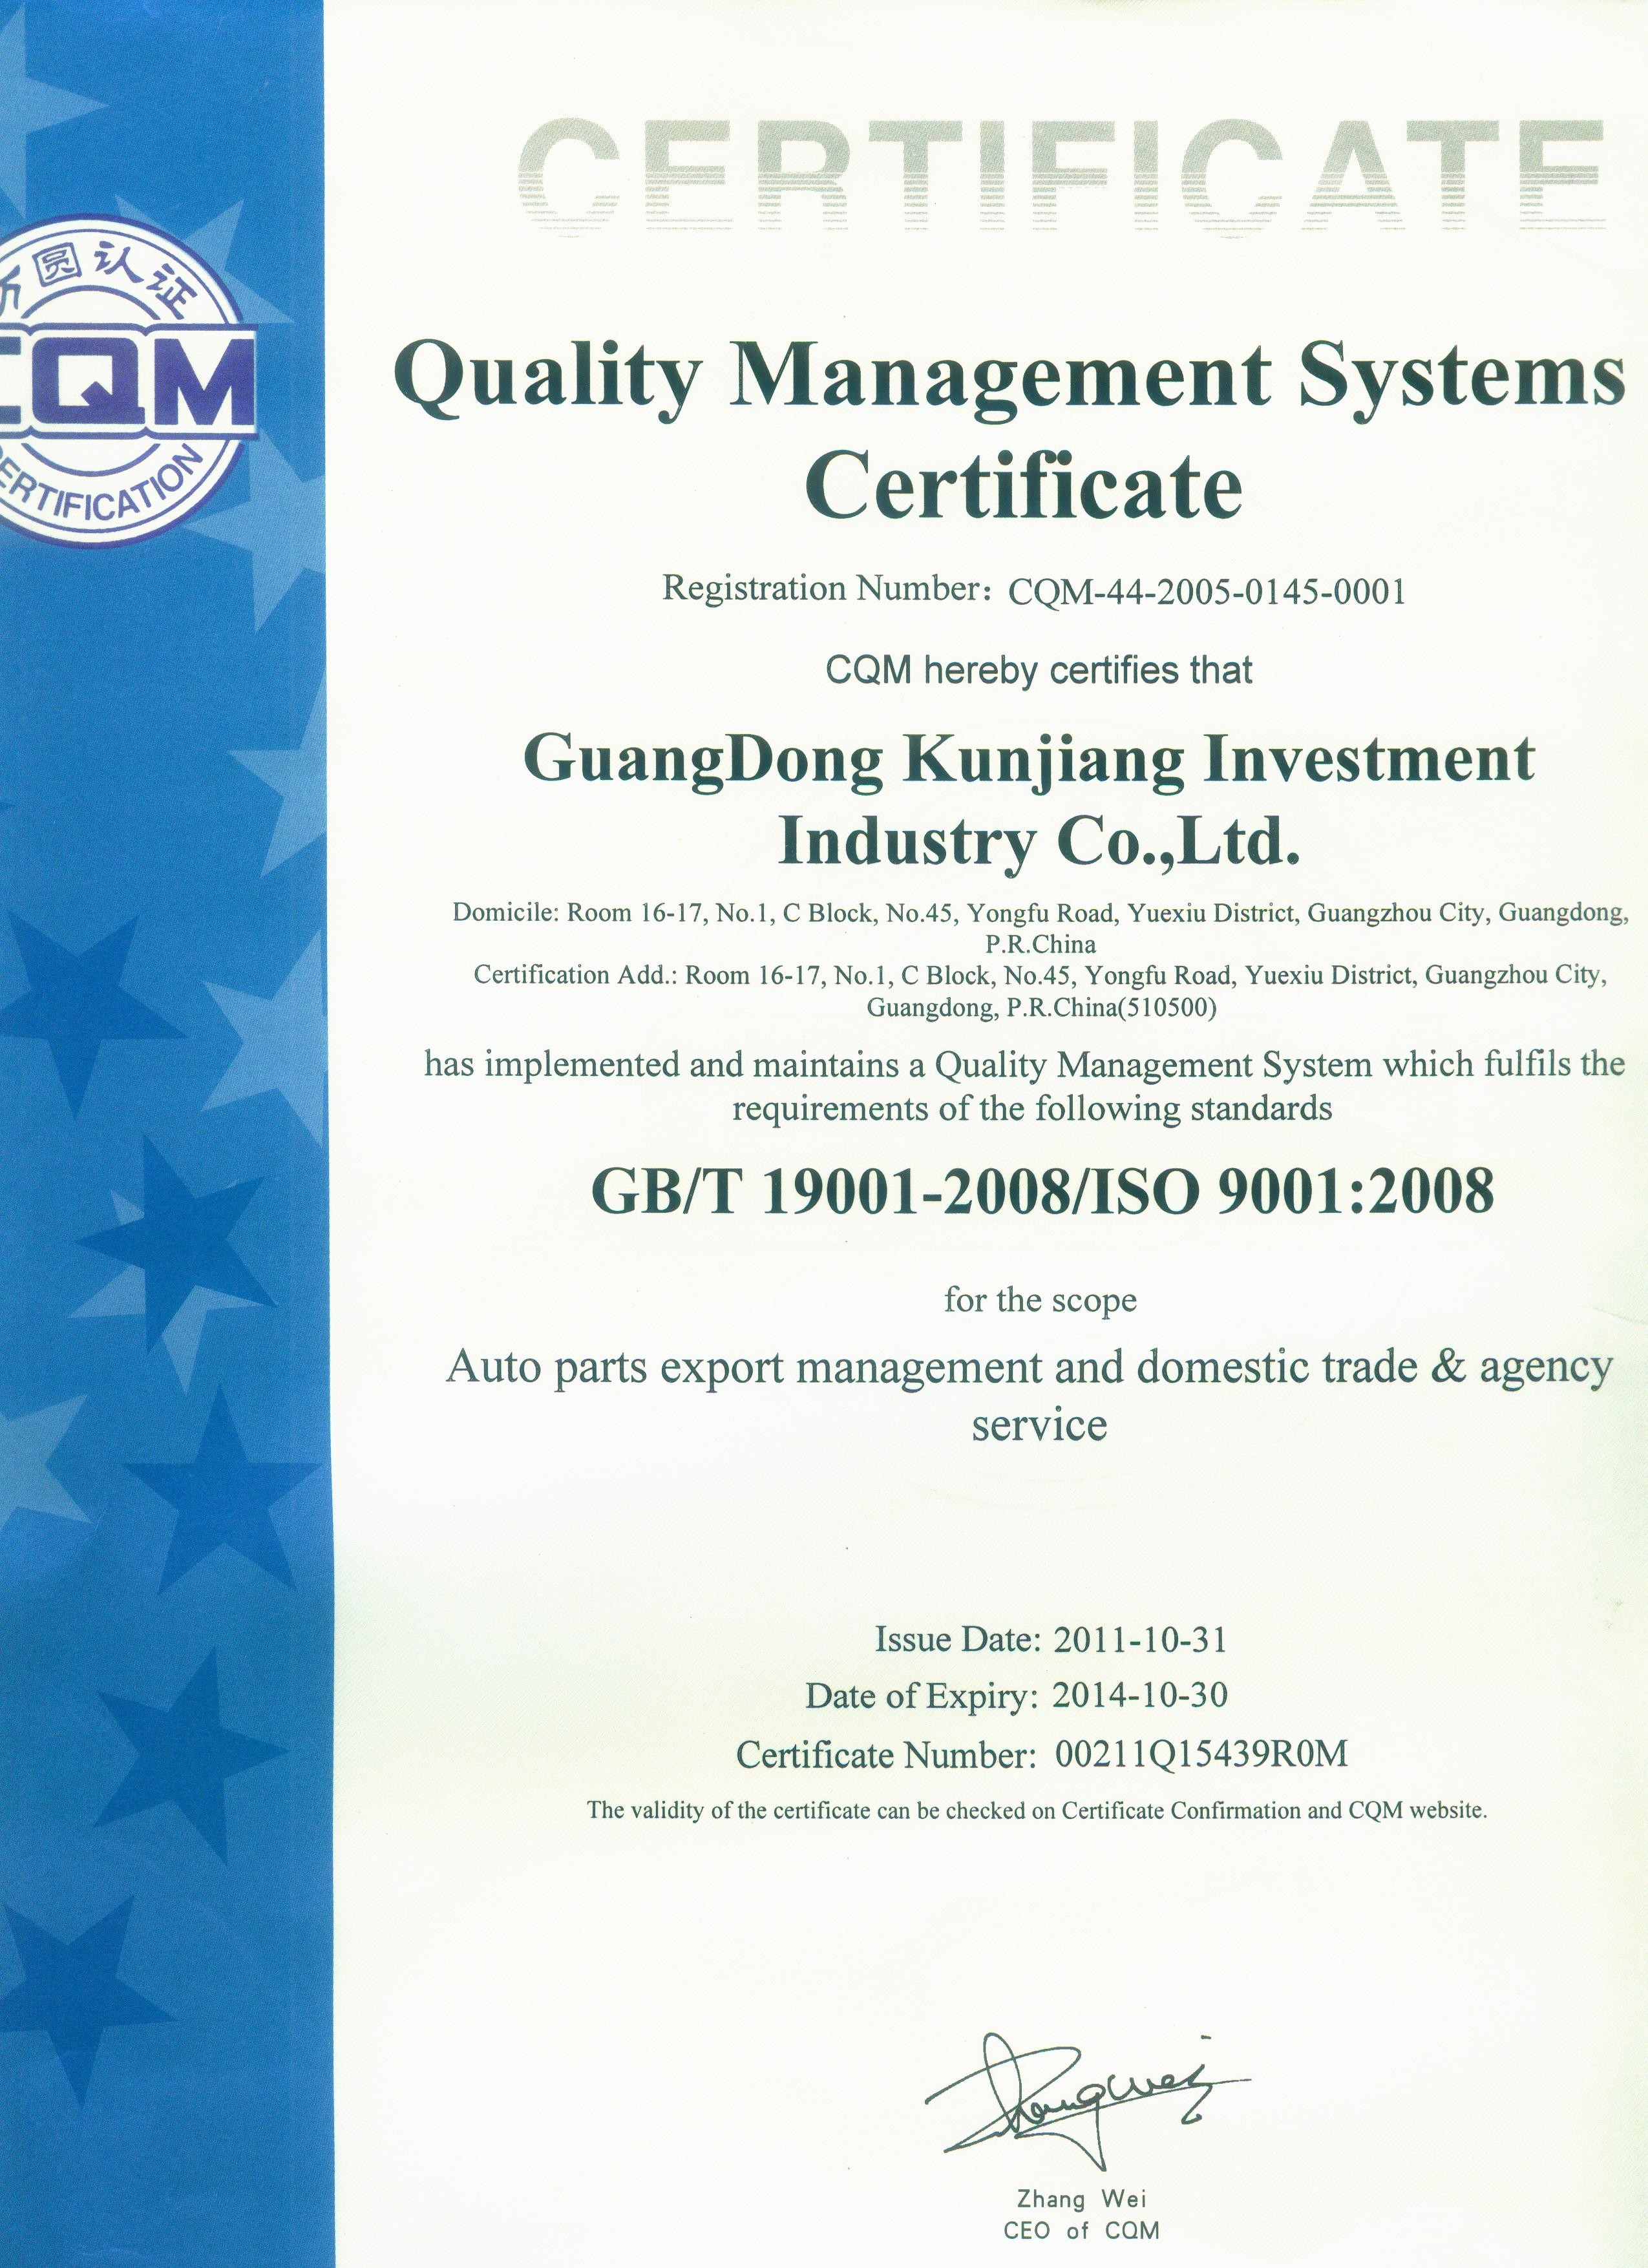 GUANGZHOU KINGA AUTOPARTS MANUFACTURE CO.,LTD. Certifications